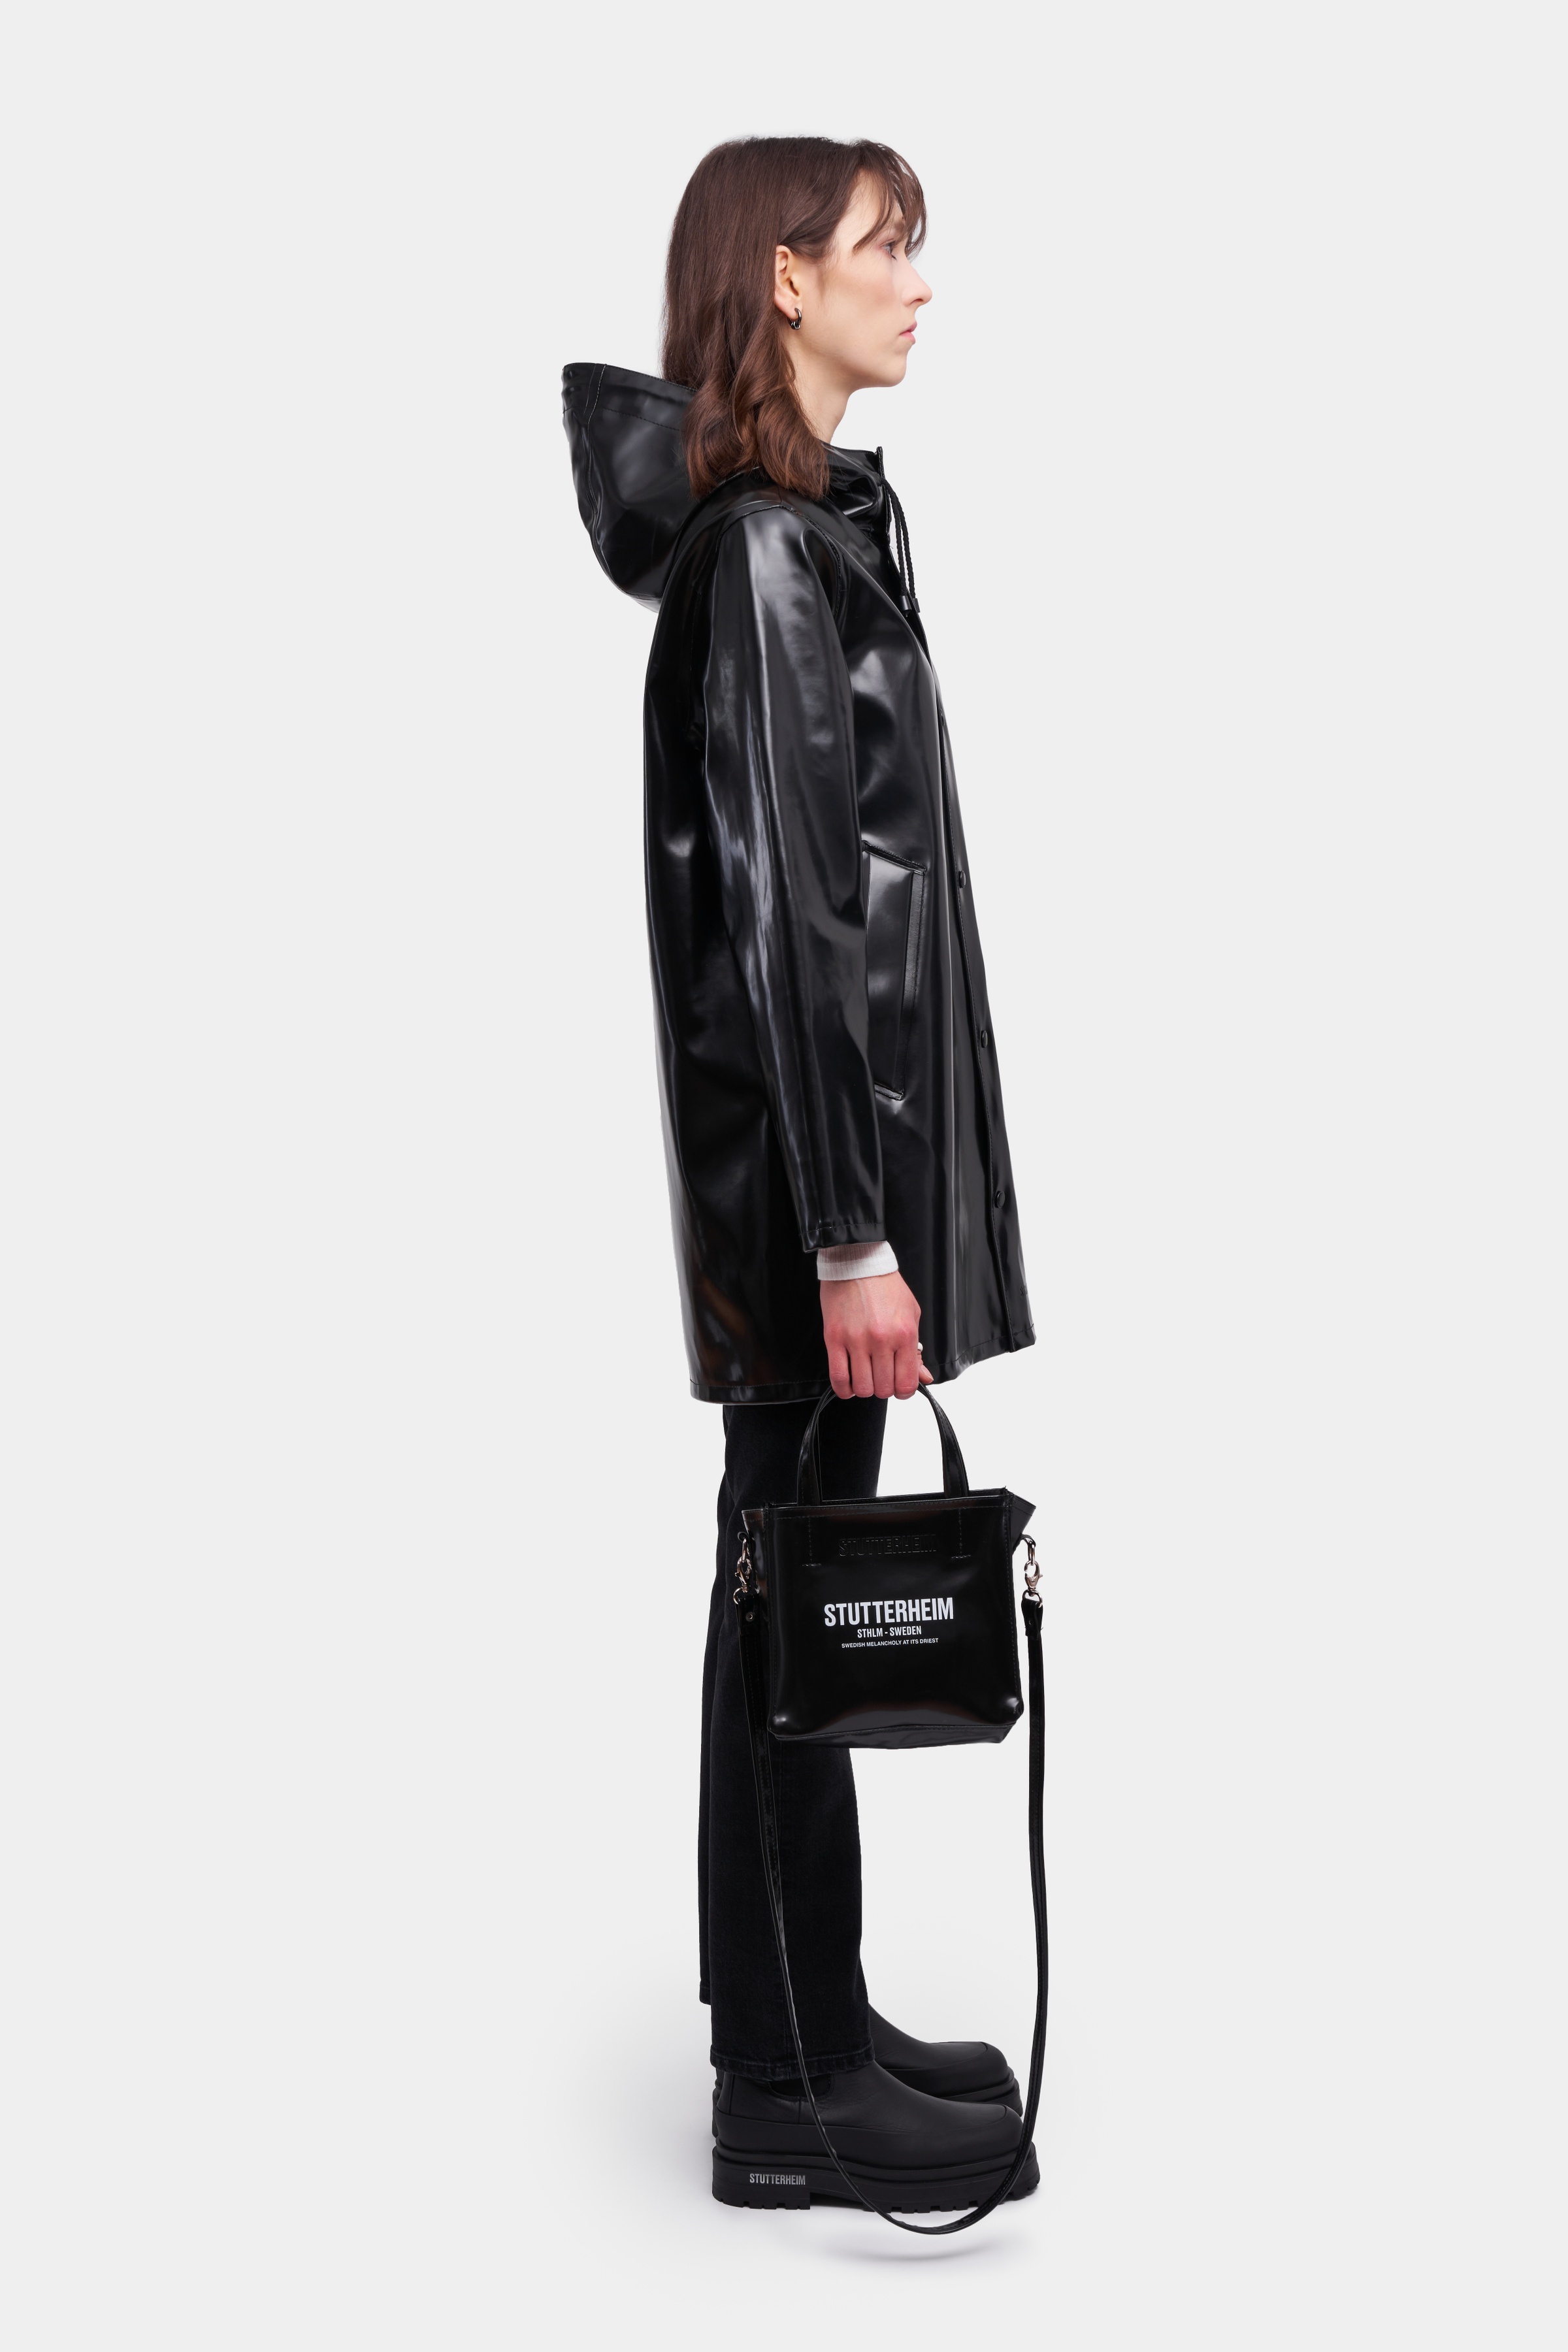 Stockholm Opal Raincoat Black - 3